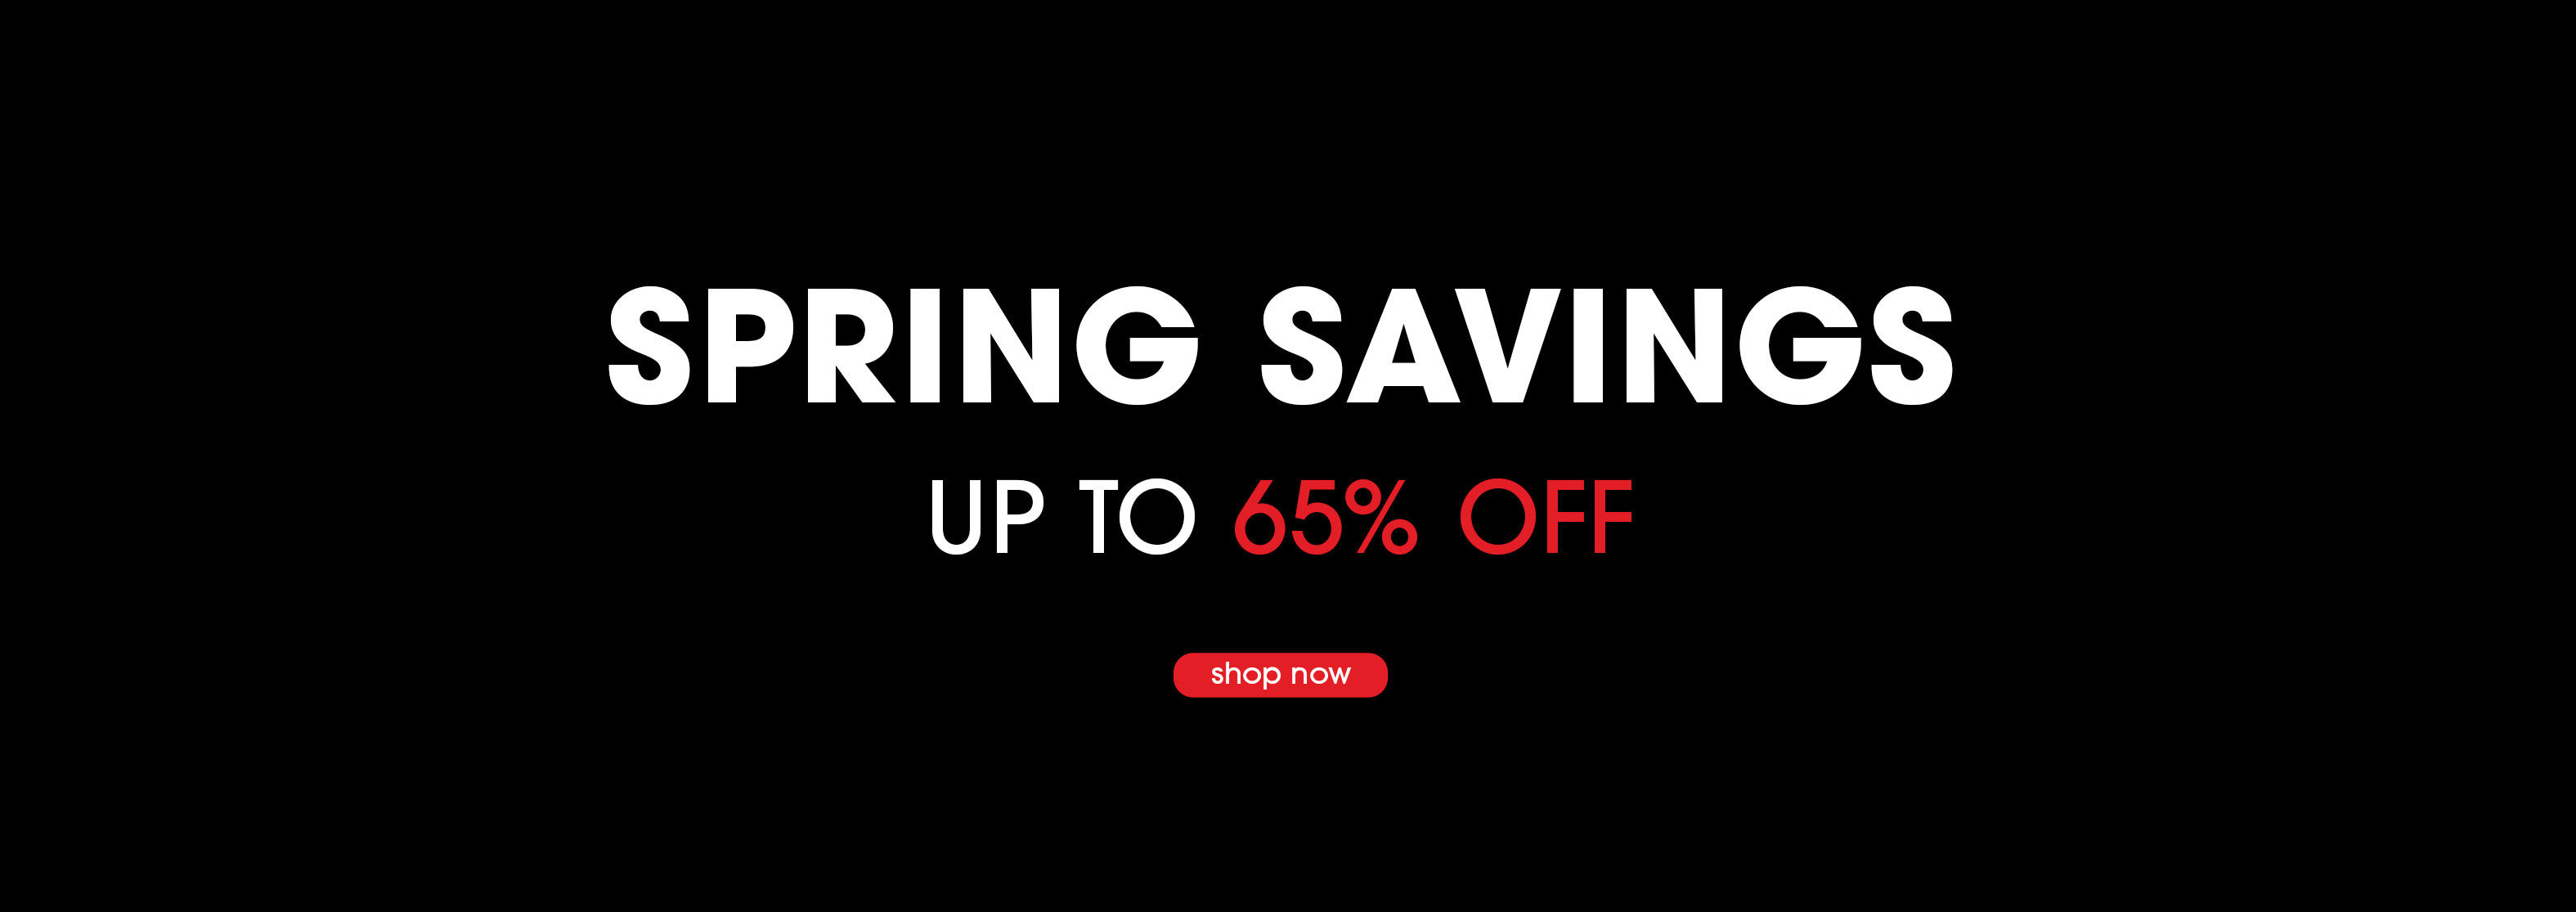 Spring Savings up to 65% off